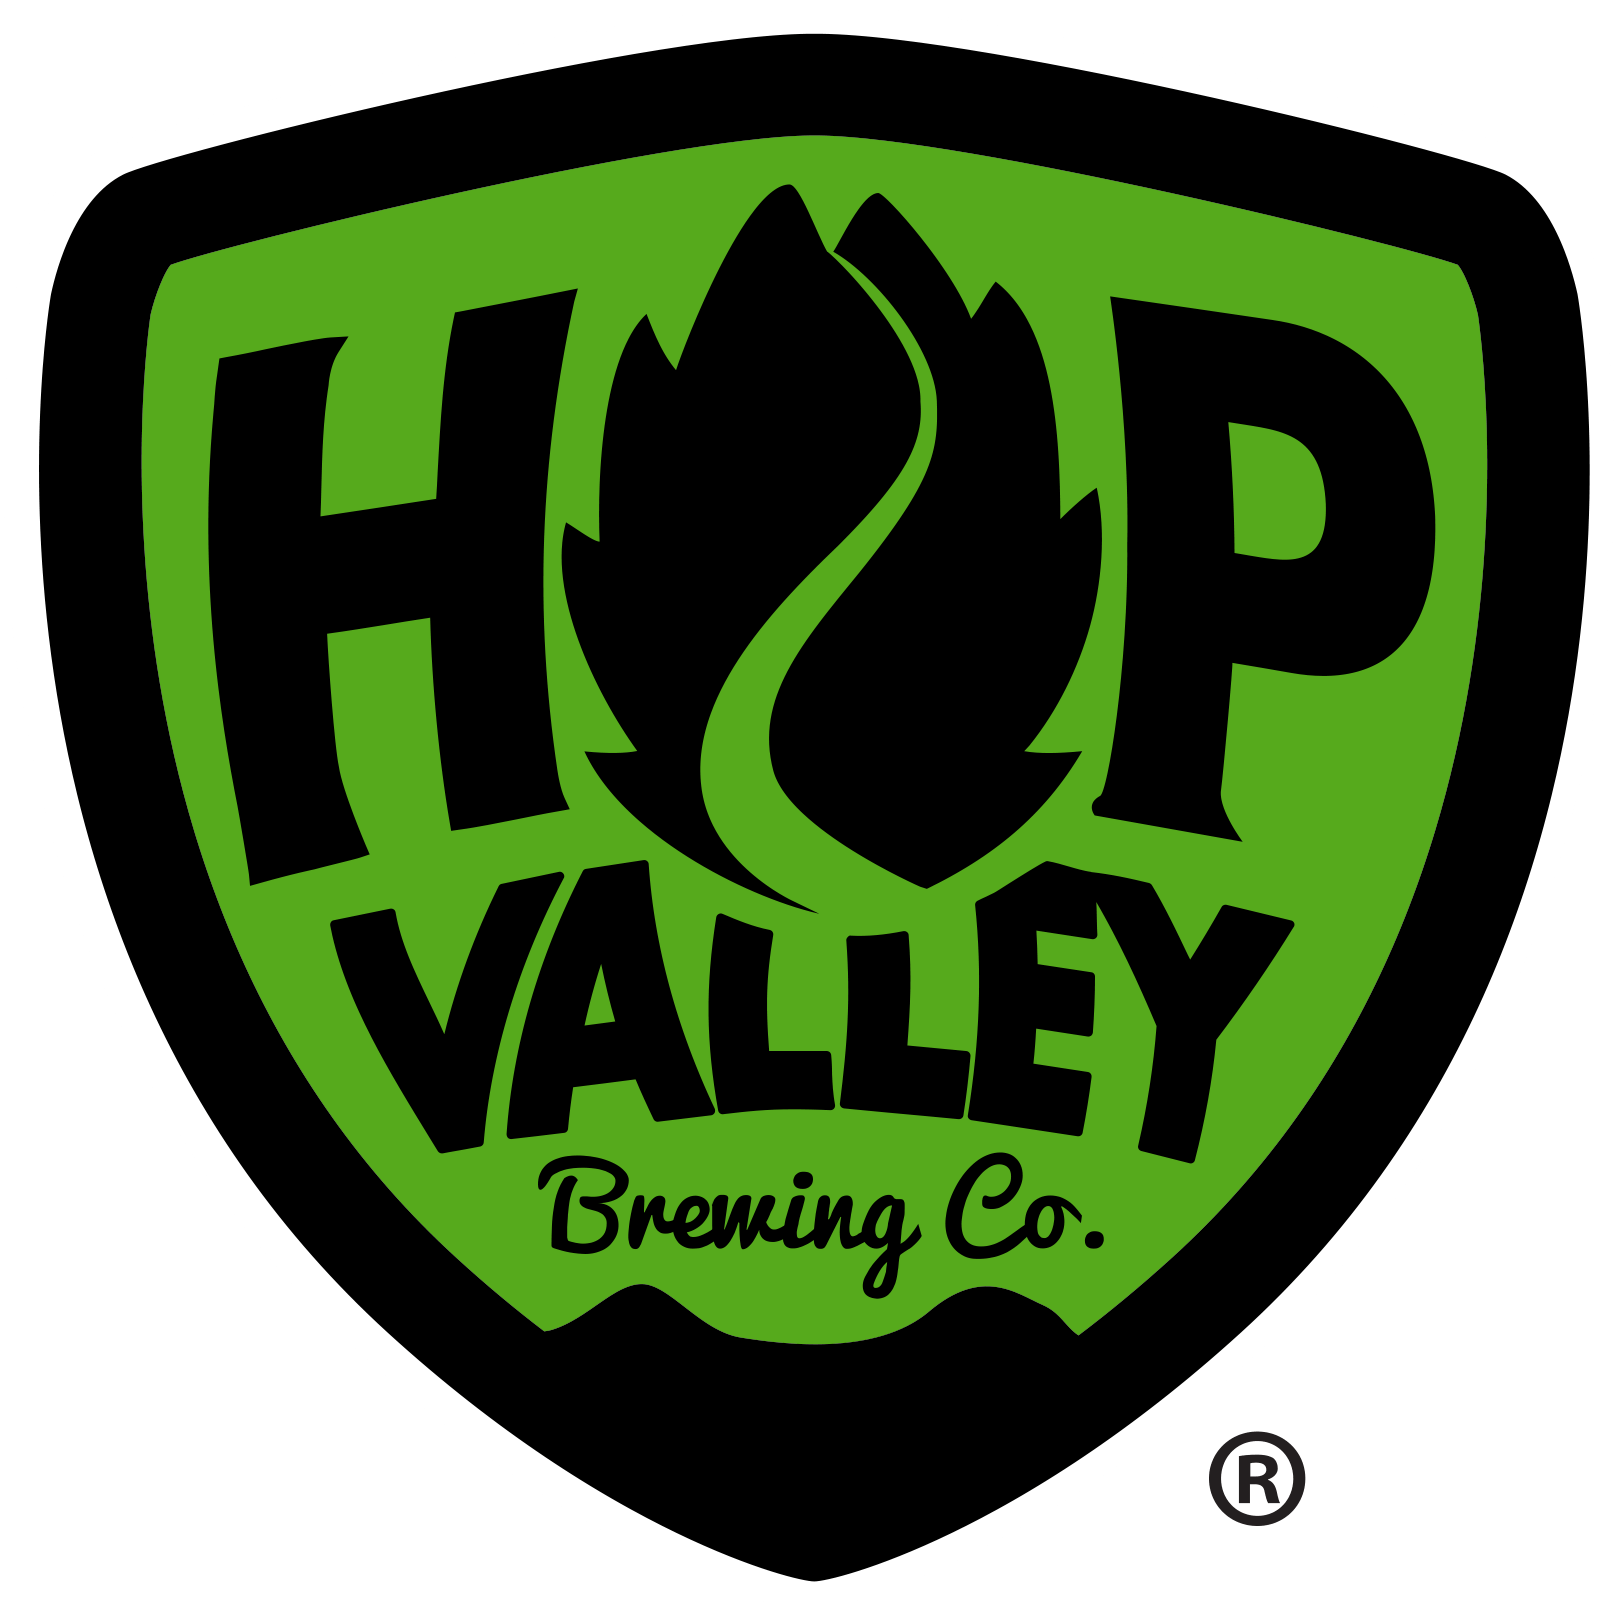 Hop Valley logo